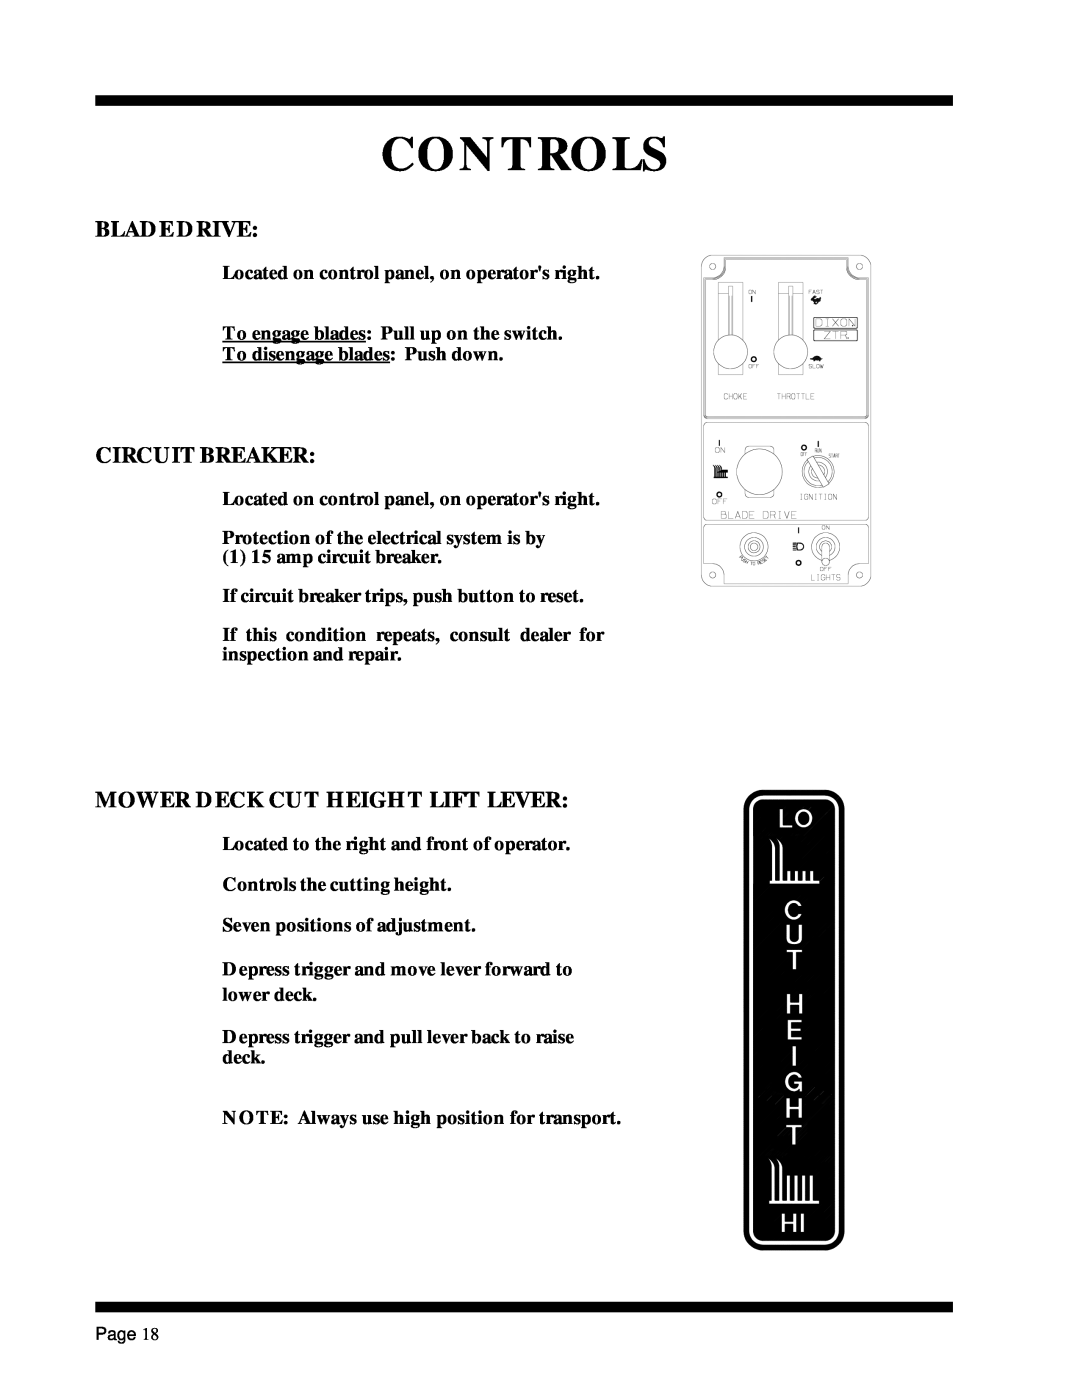 Dixon ZTR 5017Twin manual Controls, Blade Drive, Circuit Breaker, Mower Deck Cut Height Lift Lever 